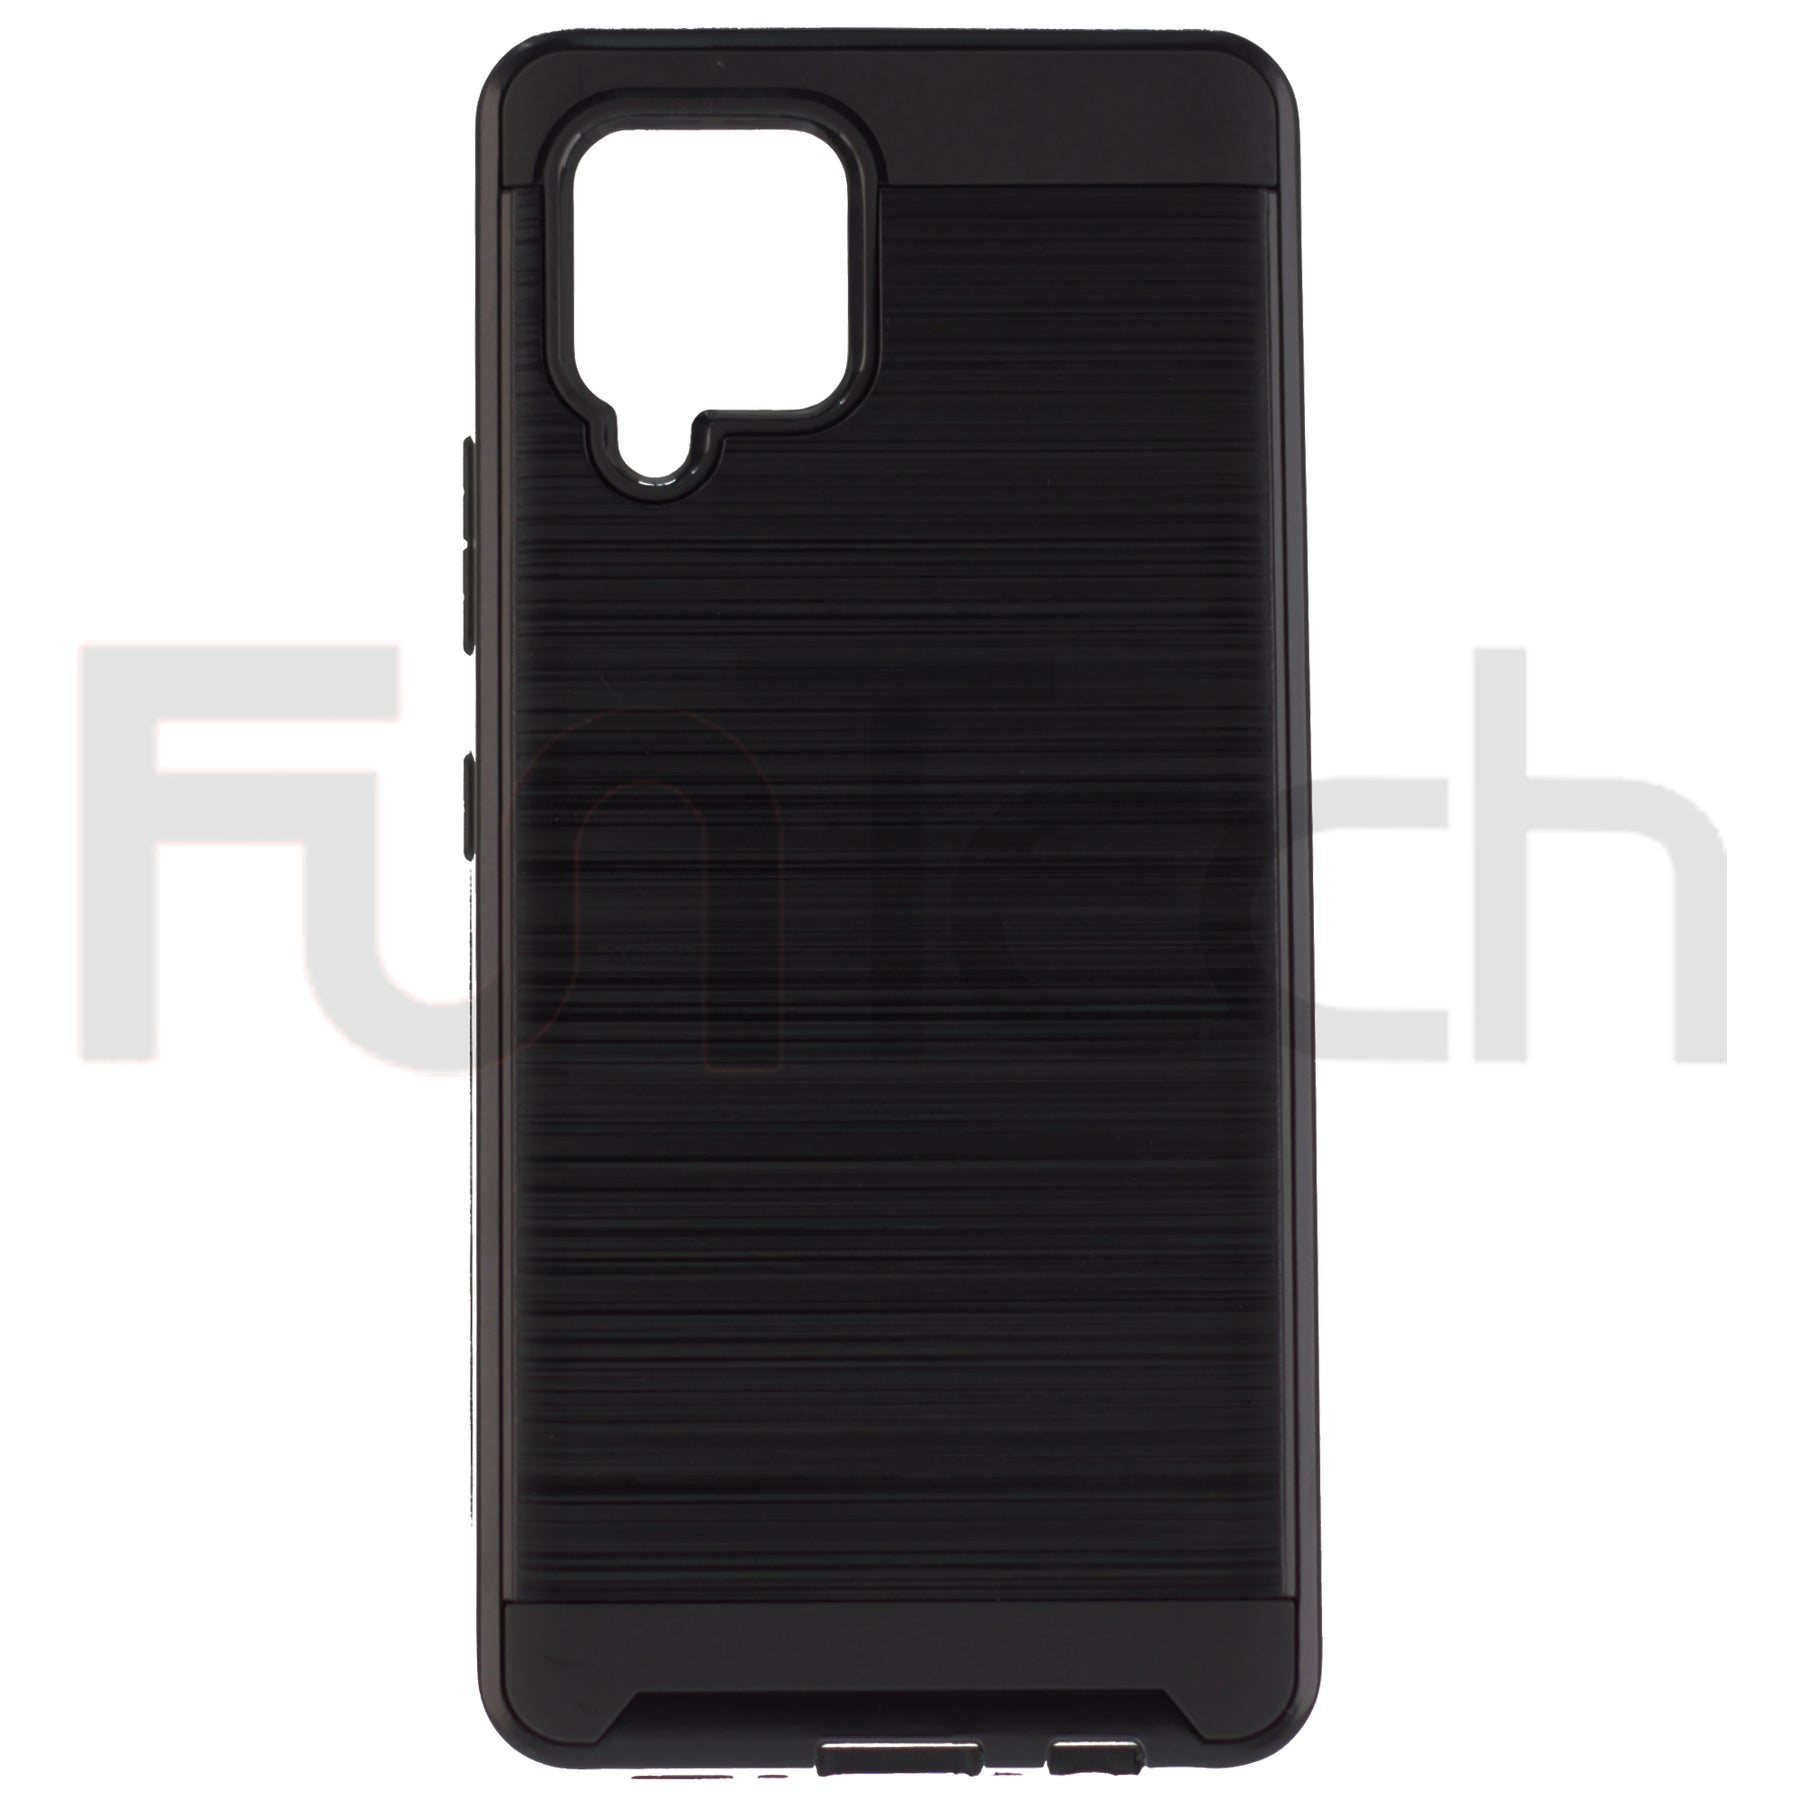 Samsung A42, Slim Armor Case, Color Black.